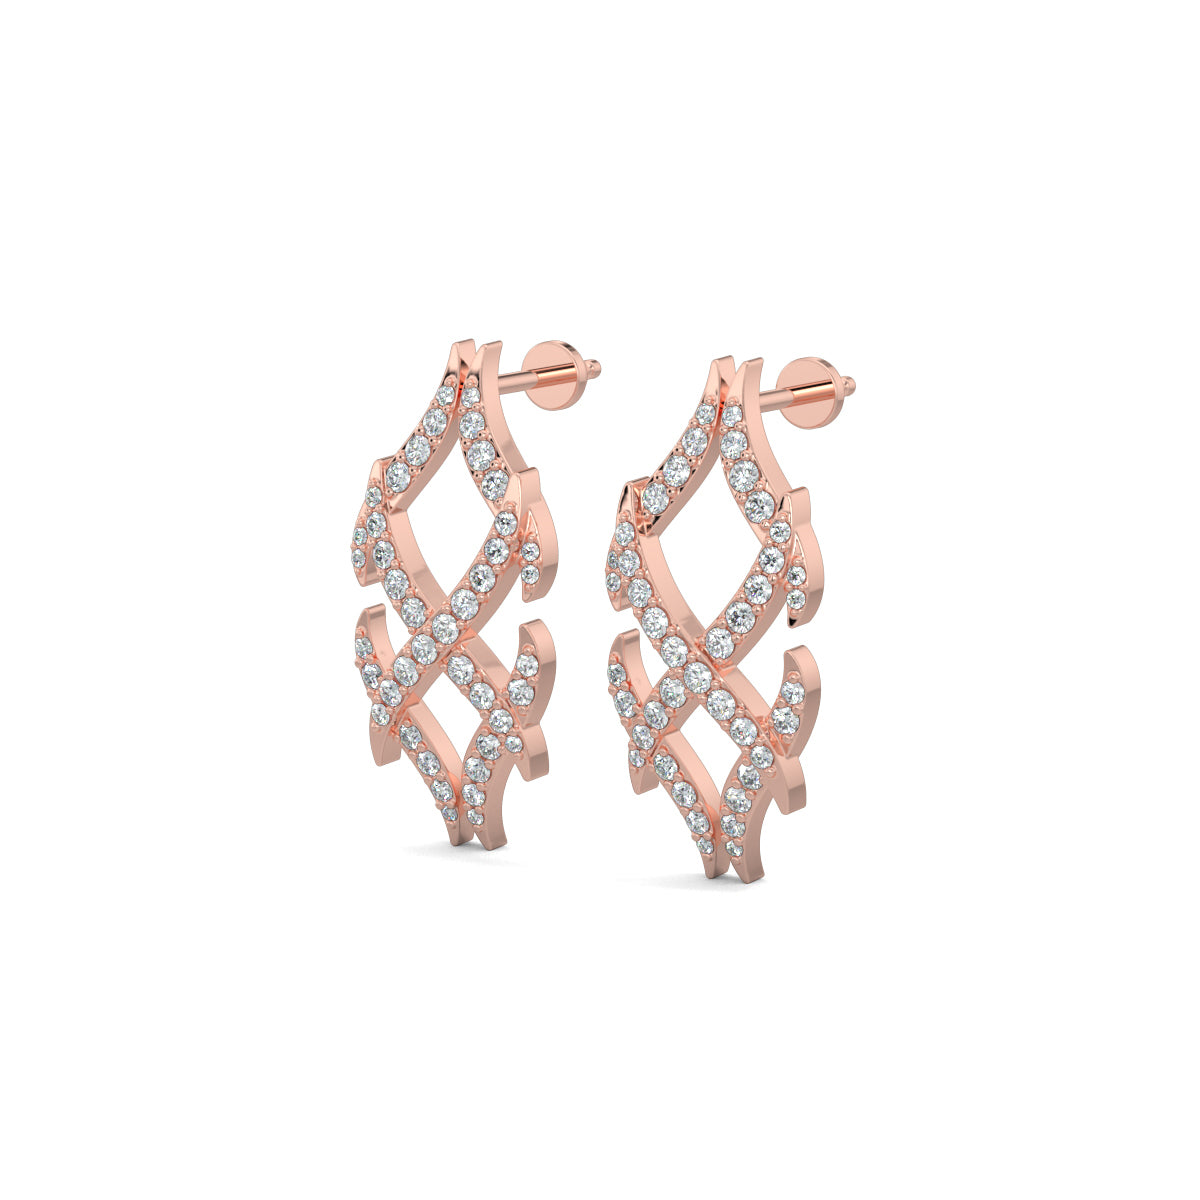 Rose Gold, Diamond Earrings, Italian-inspired diamond earrings, mid-length earrings, natural diamonds, lab-grown diamonds, Bella Luce Earrings, elegant jewelry, sophisticated earrings, Italian design inspired earrings.